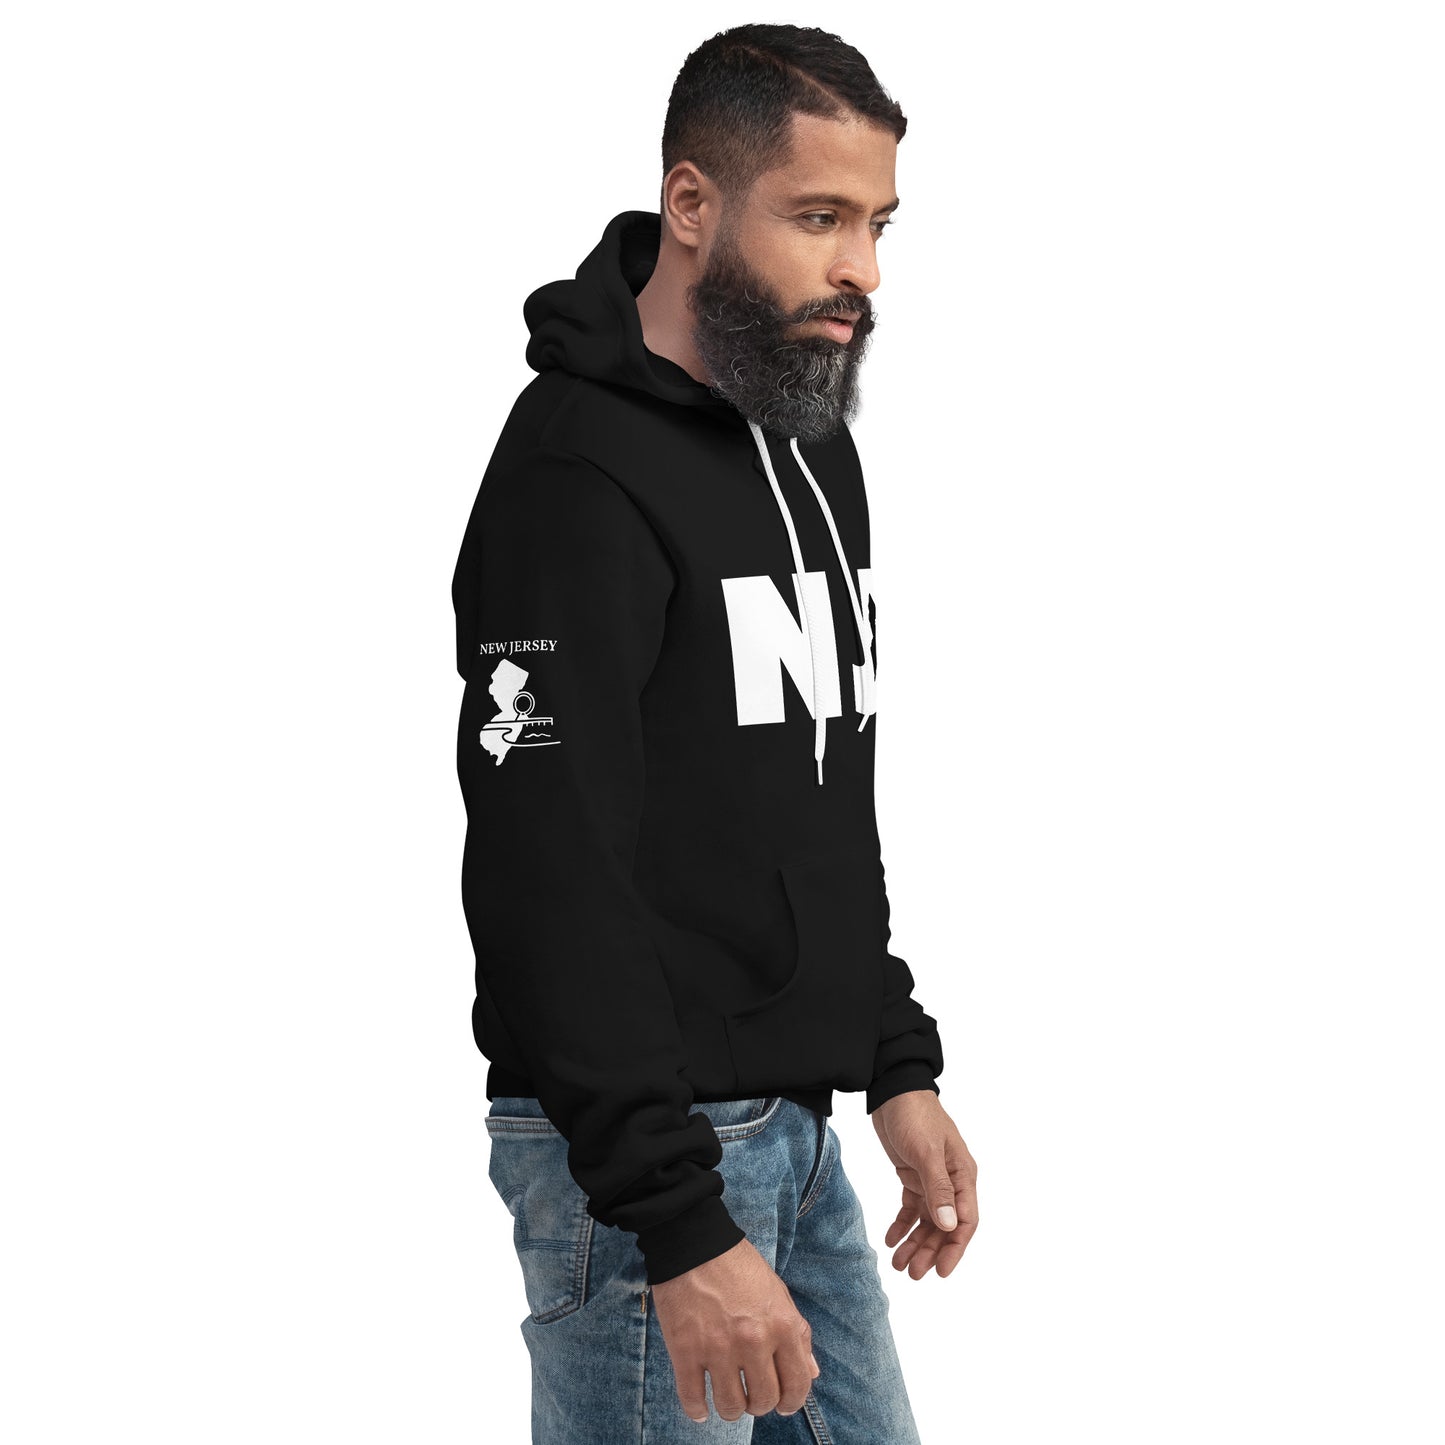 Unisex hoodie - NJ (New Jersey)